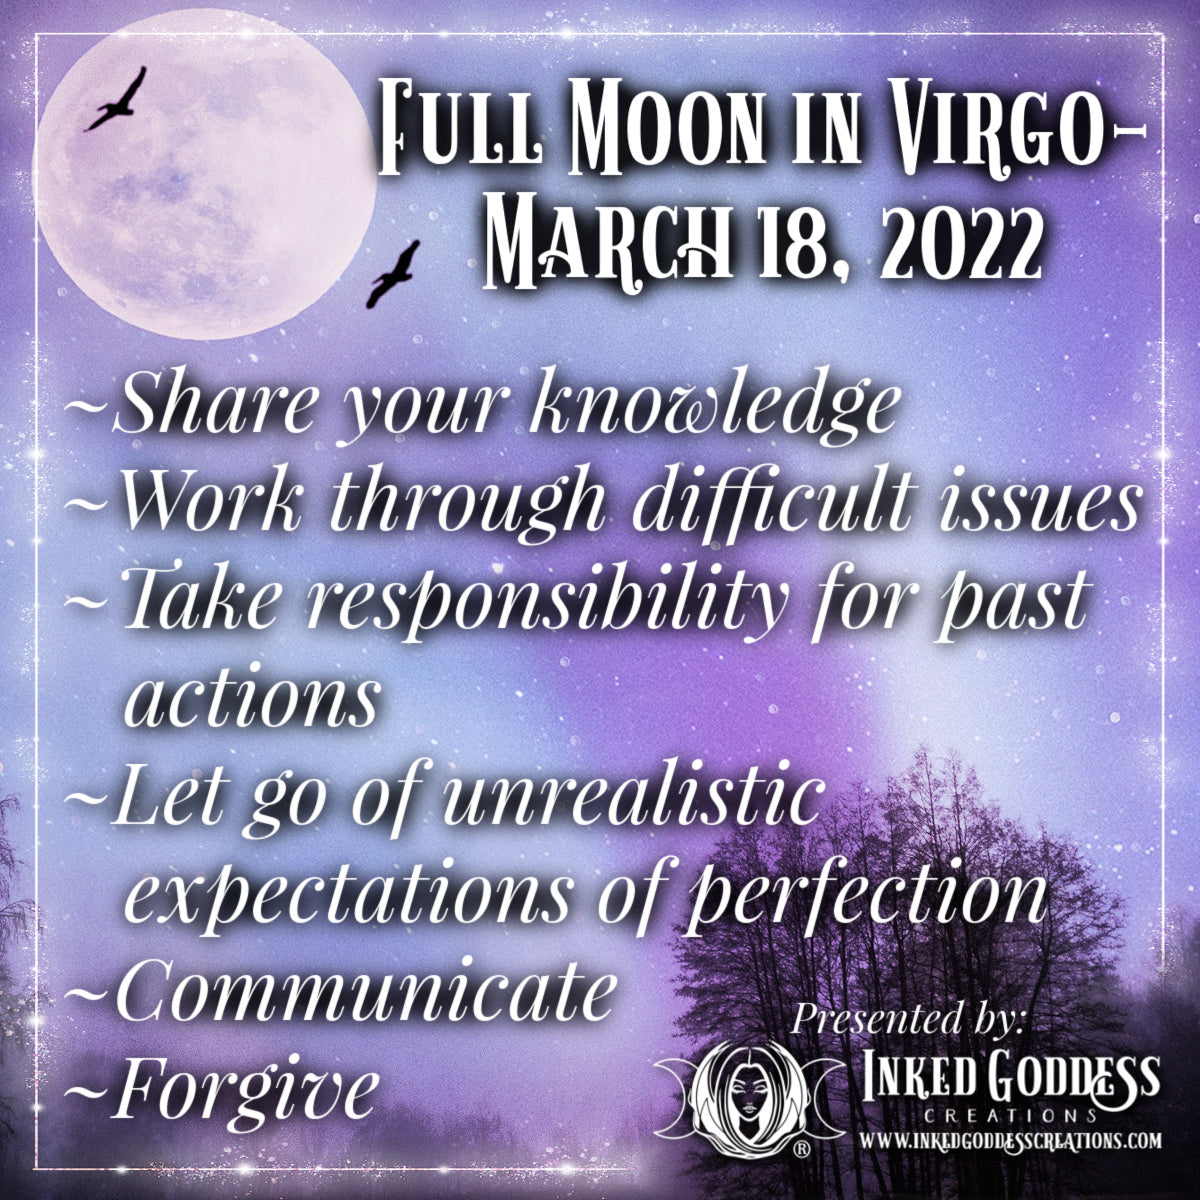 Full Moon in Virgo- March 18, 2022